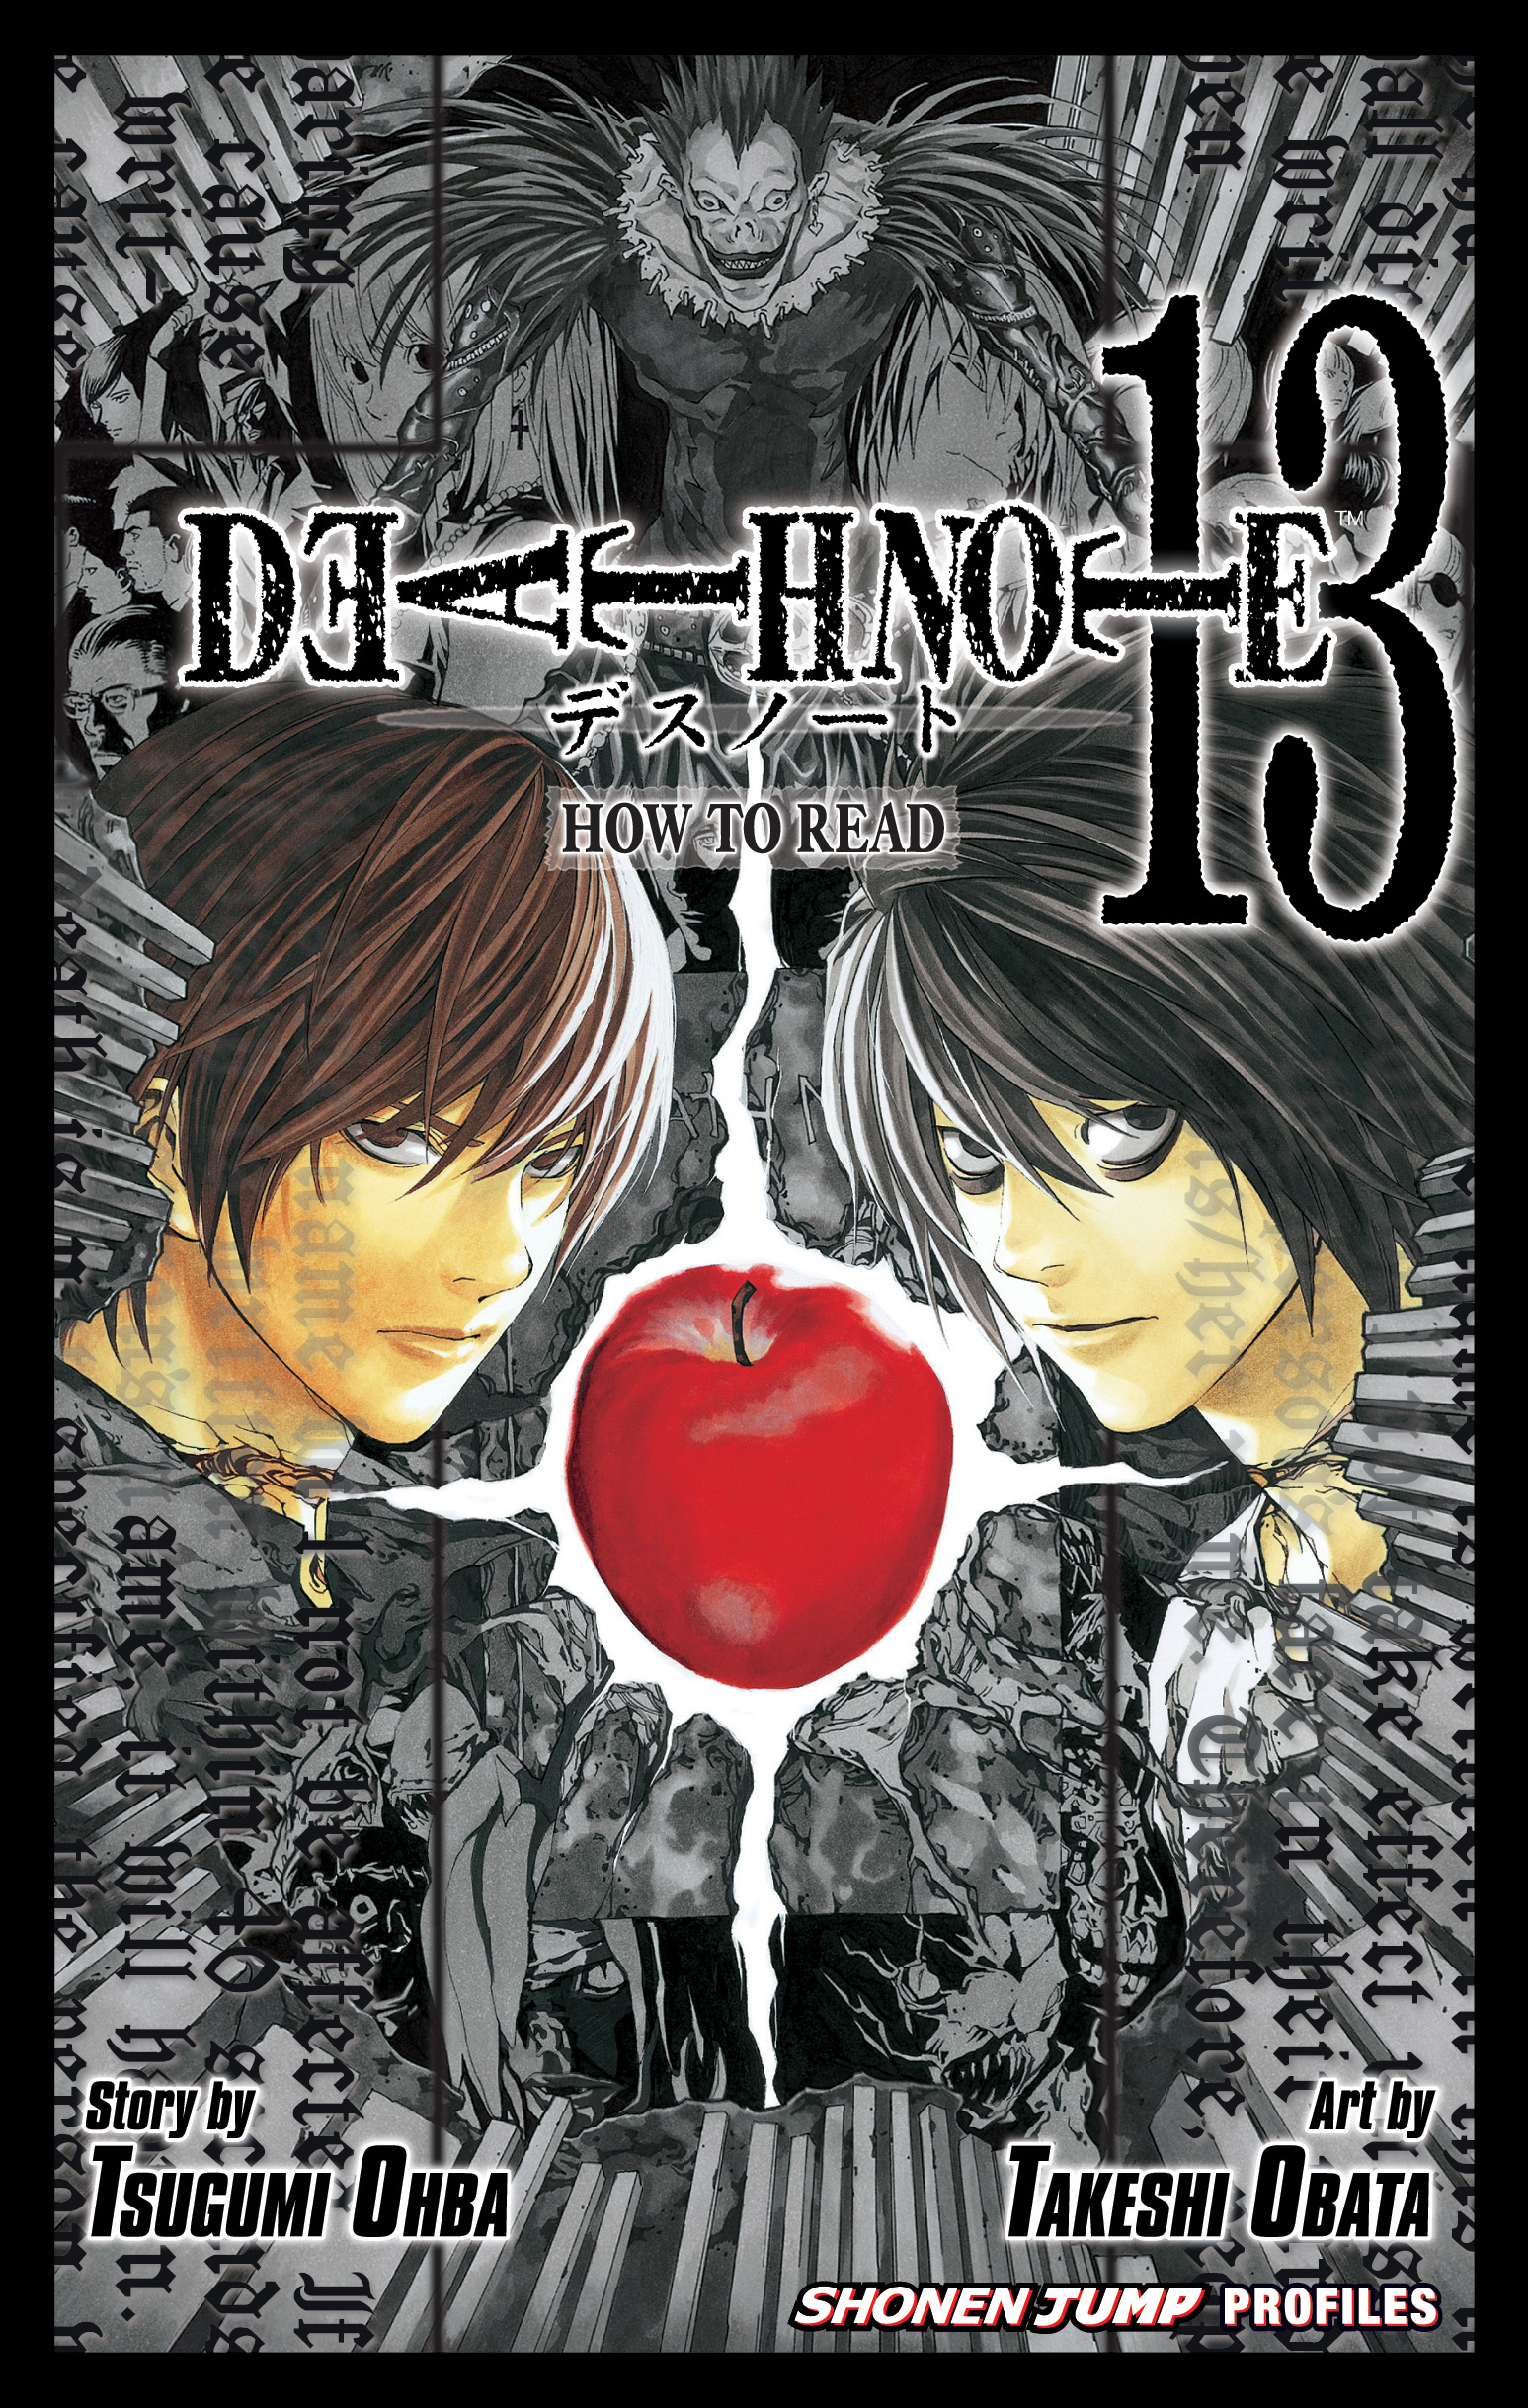 Death Note: L change the World: Novel by Obata, Takeshi